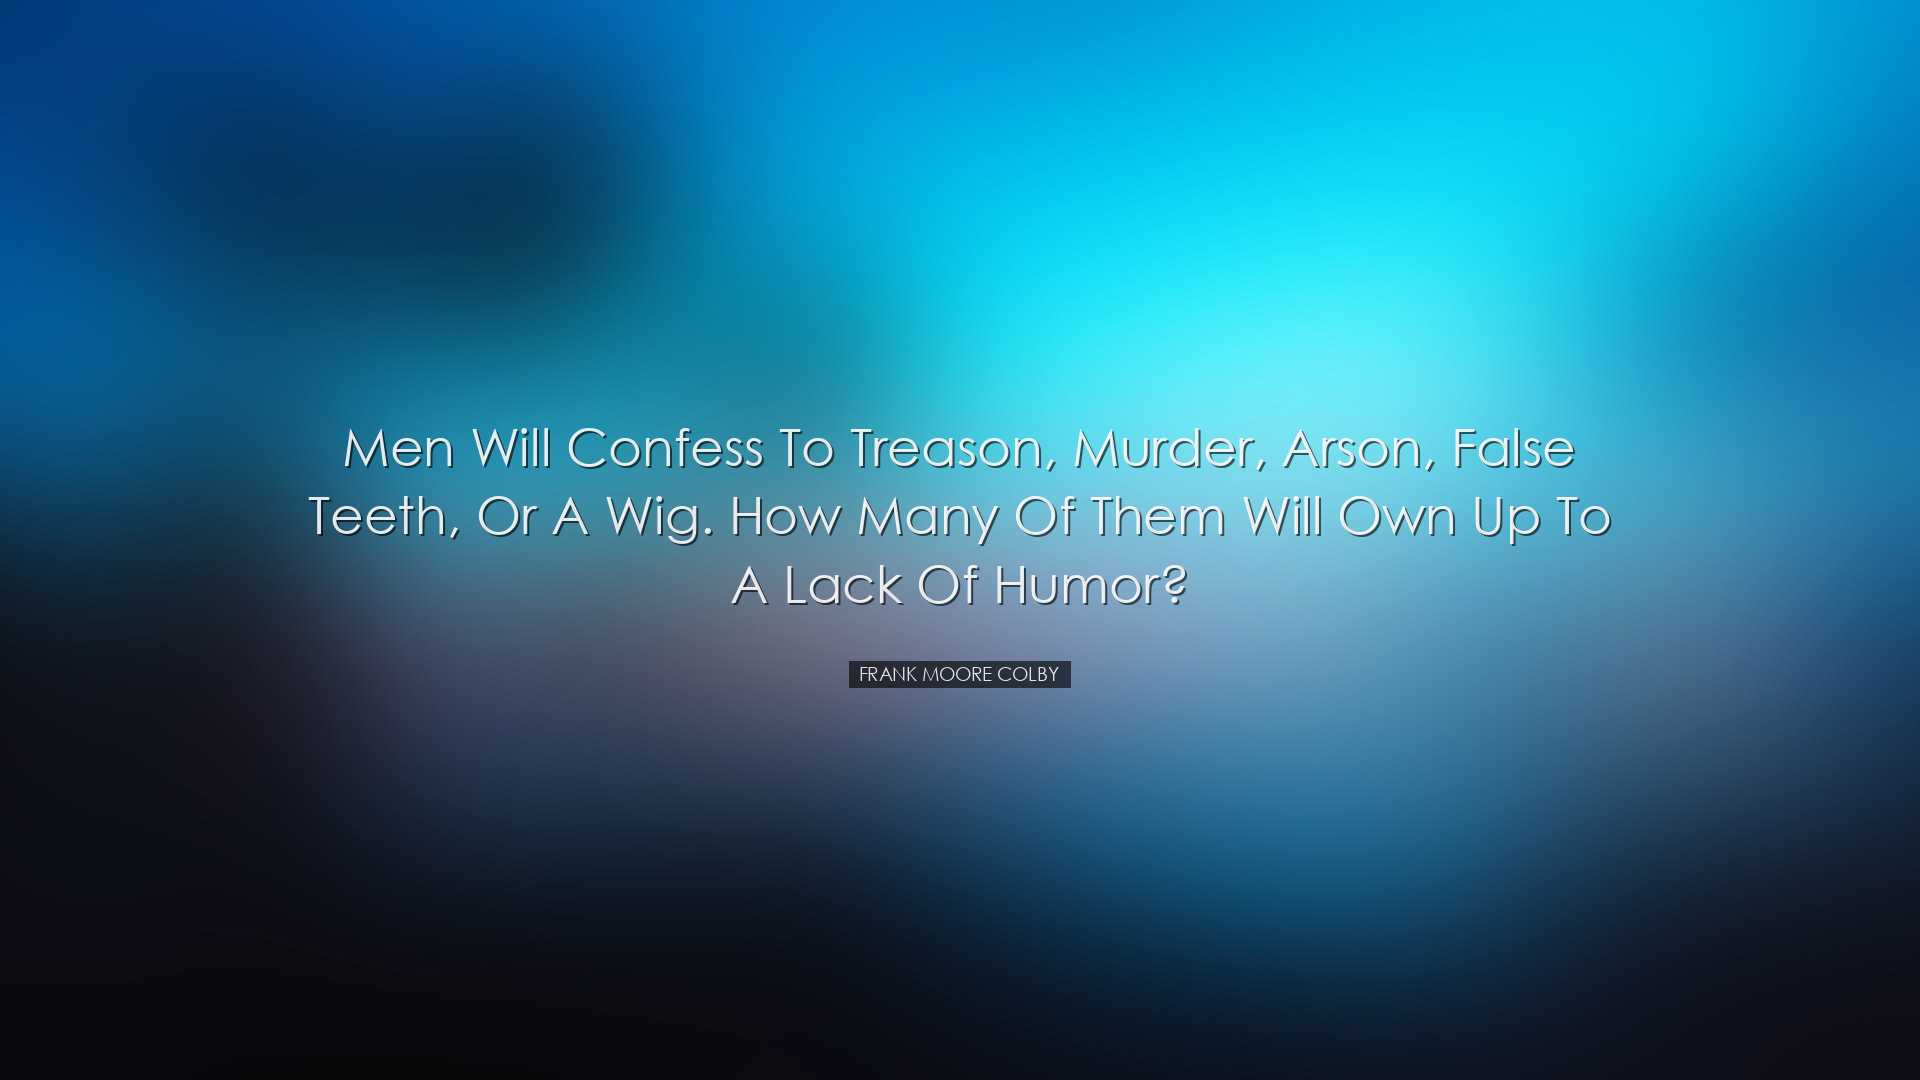 Men will confess to treason, murder, arson, false teeth, or a wig.